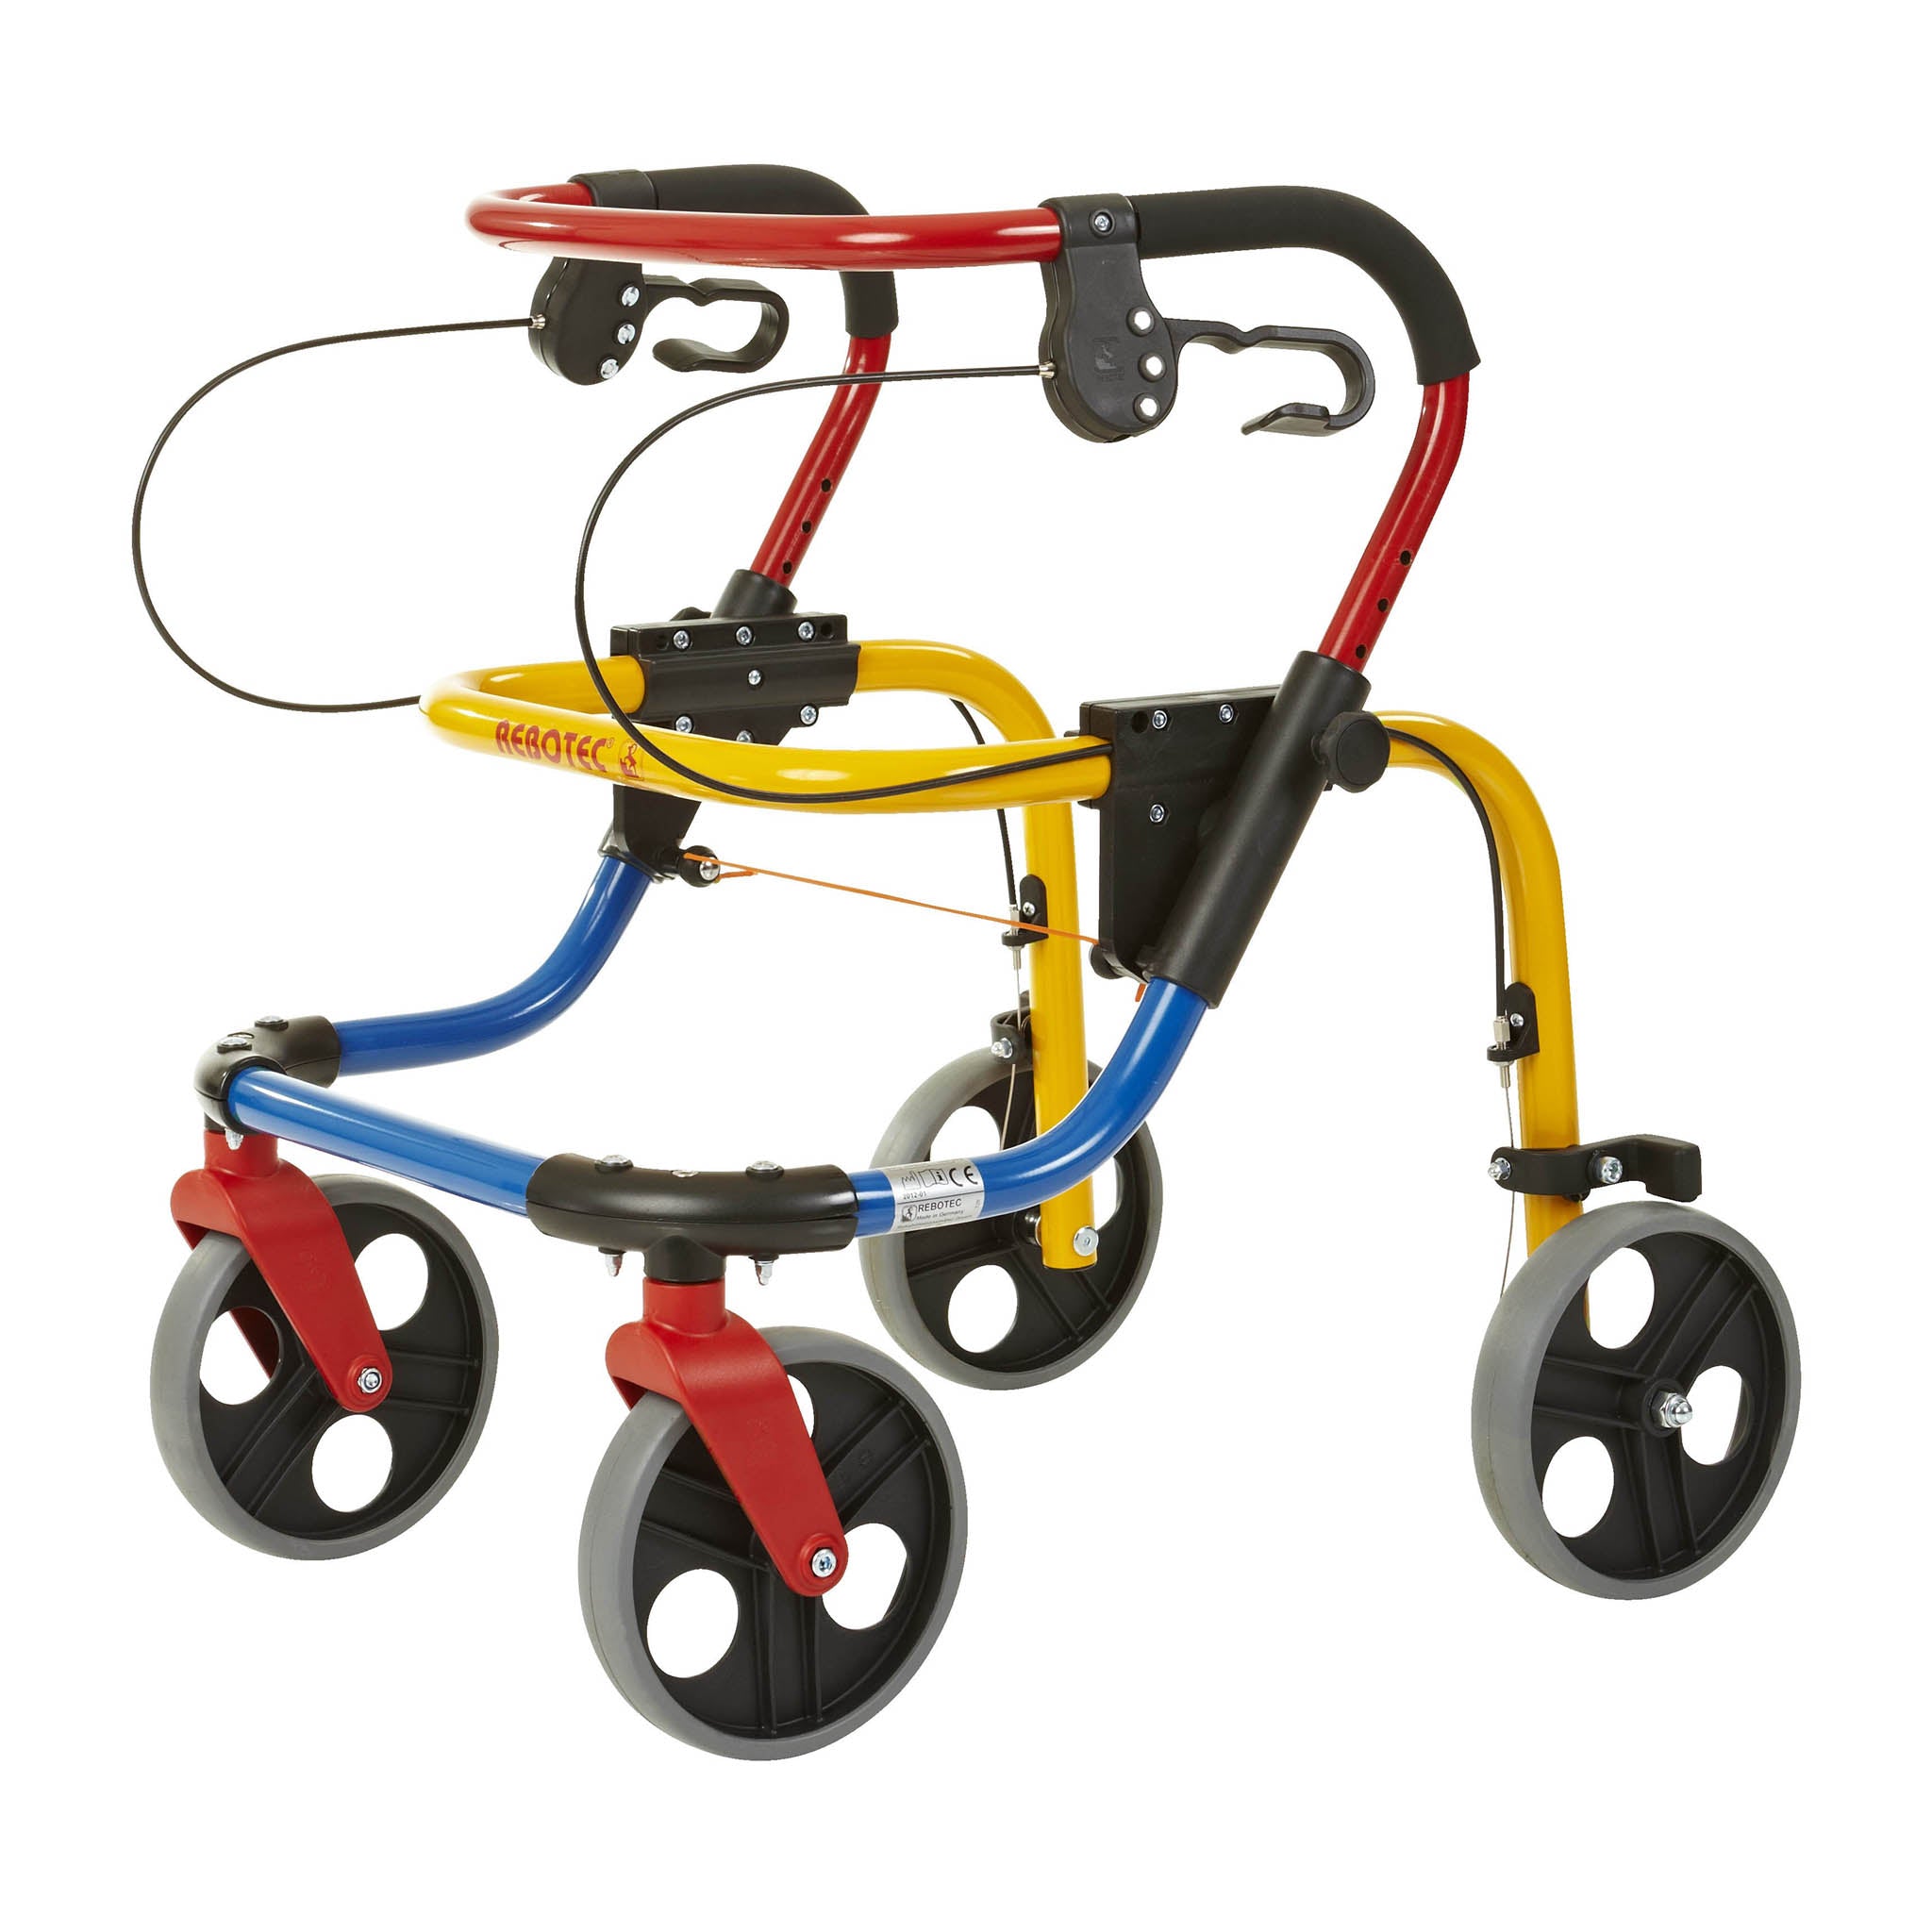 TR Equipment Rebotec Fixi-Small Pediatric Anterior Rollator